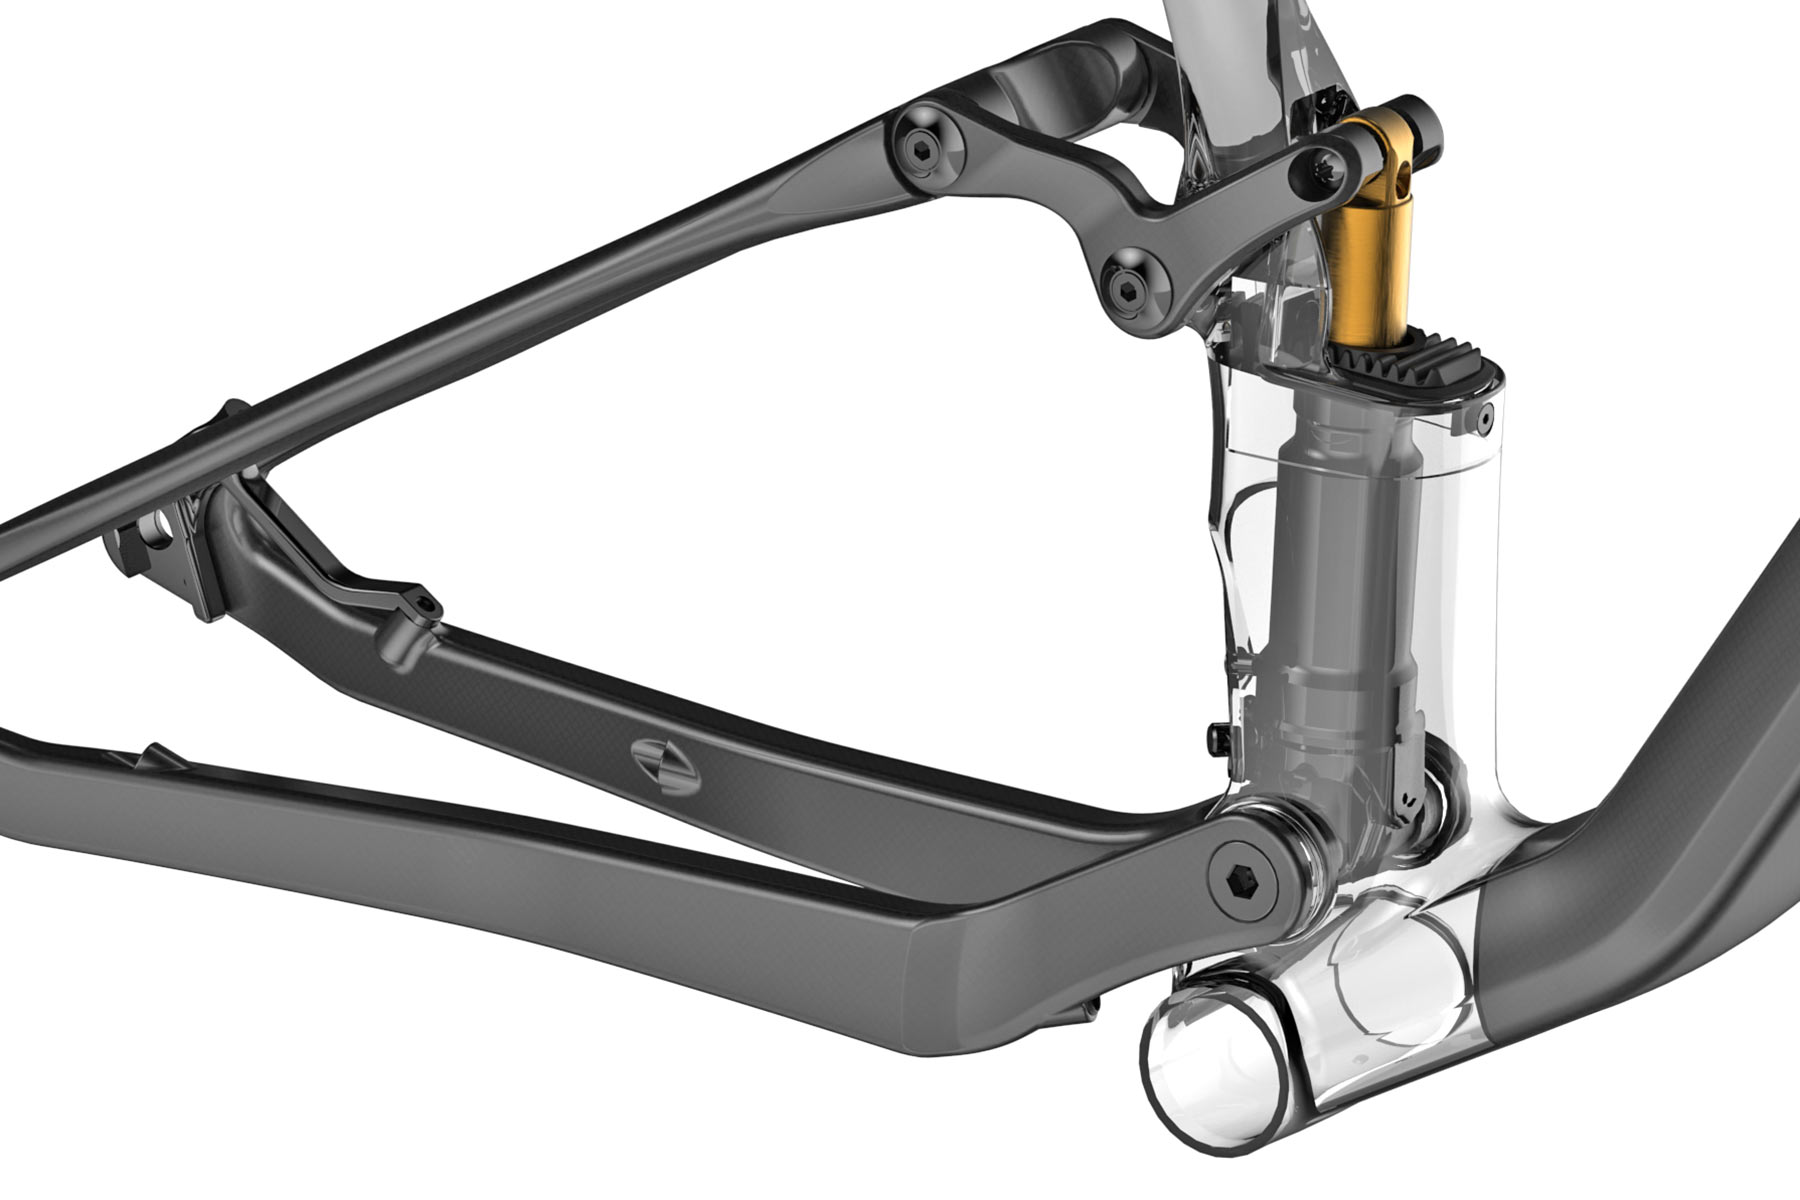 2023 Olympia F1-X semi-integrated hidden shock 100mm XC mountain bike, x-ray frame